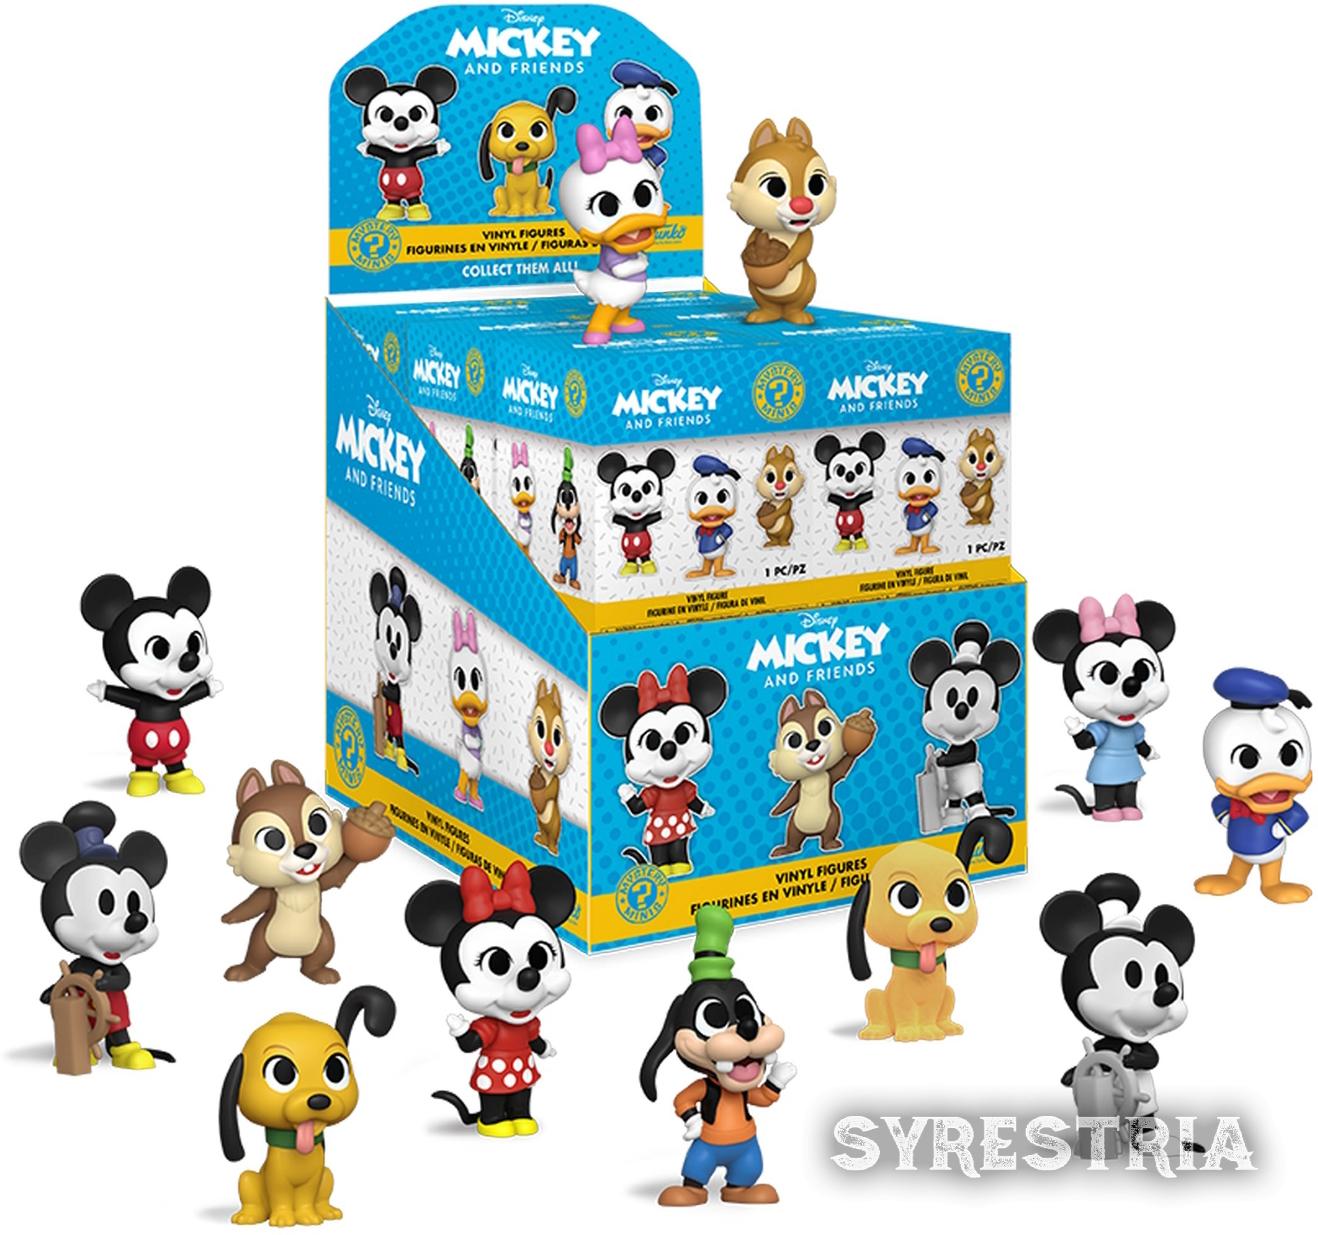 Disney Mickey and Friends - Funko Mystery Minis - Vinyl Figur